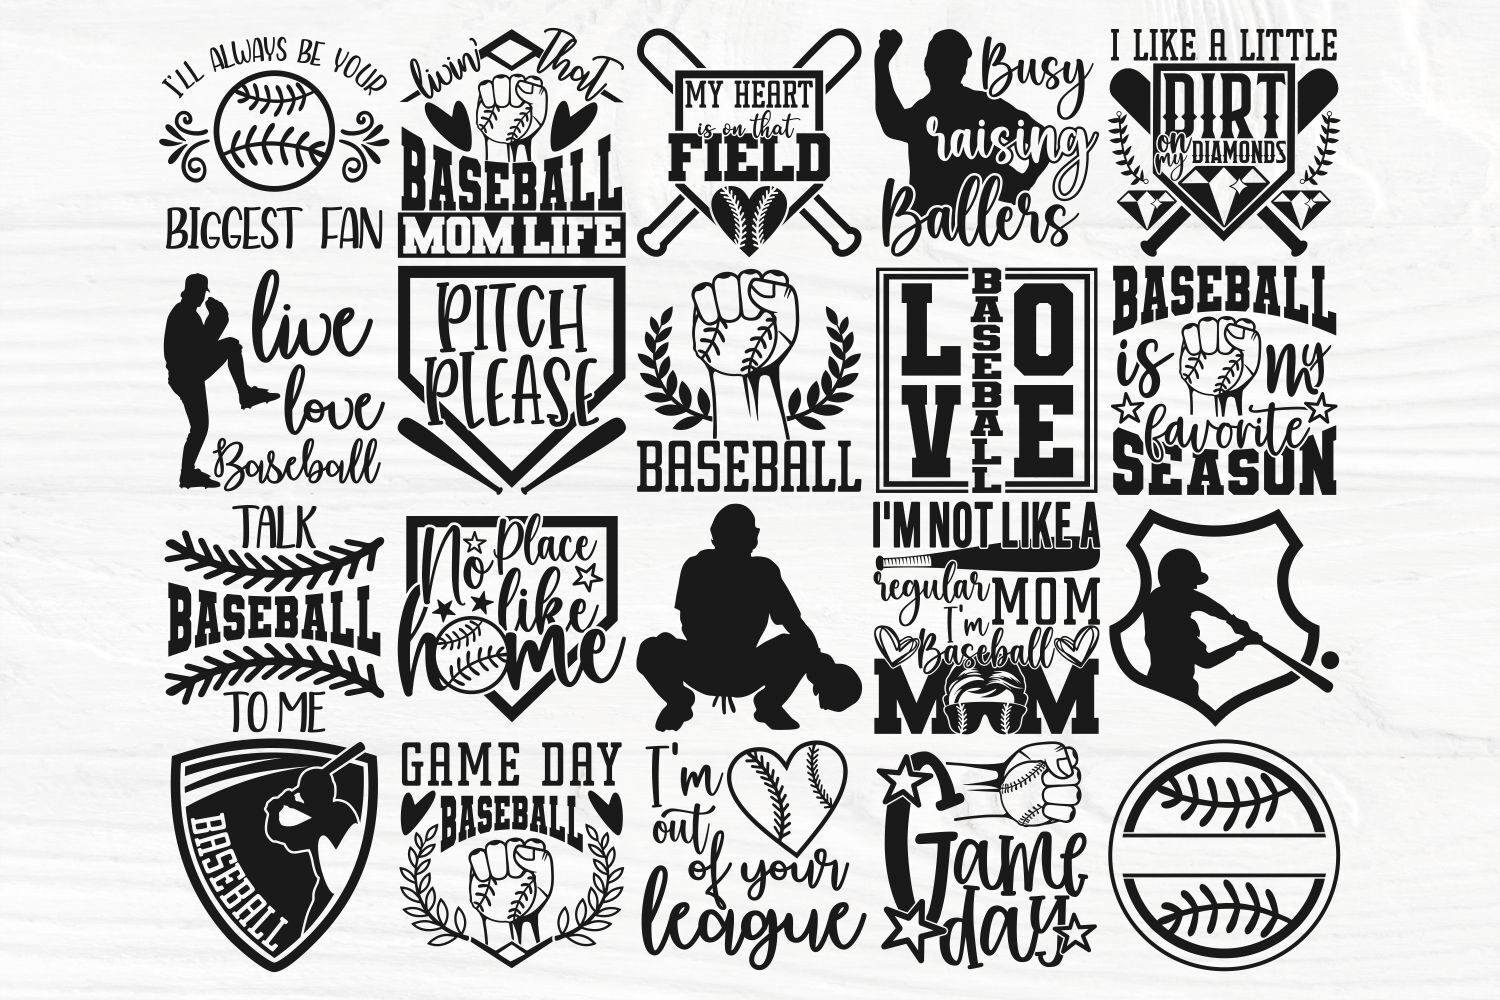 Baseball SVG Bundle, Baseball Shirt SVG Graphic by TonisArtStudio